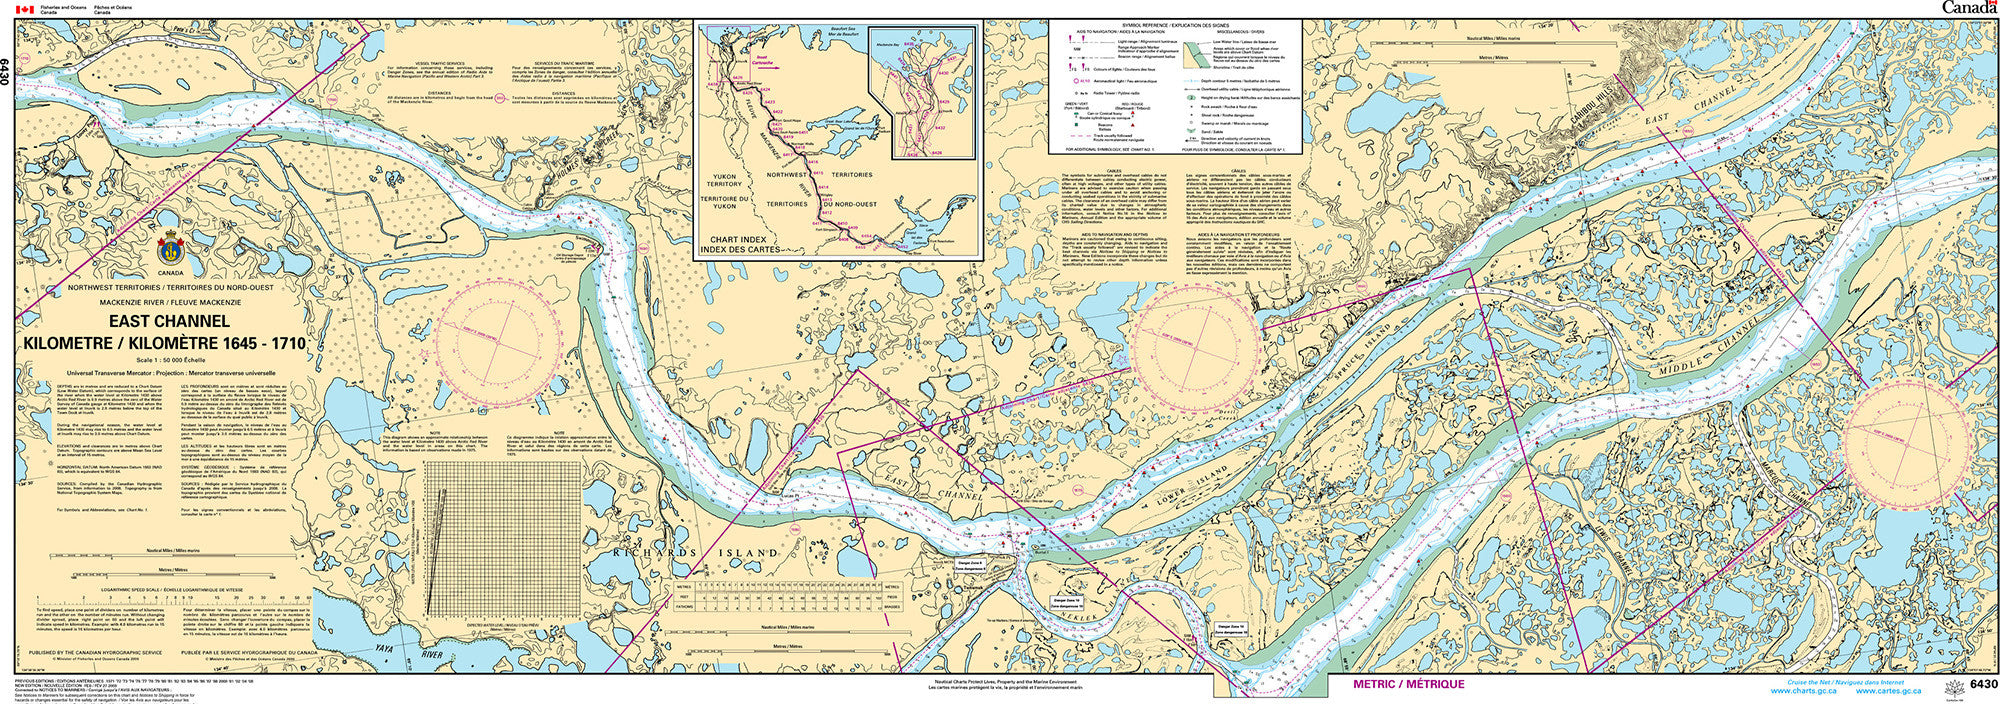 Canadian Hydrographic Service Nautical Chart CHS6430: East Channel, Kilometre/Kilomètre 1645 - 1710